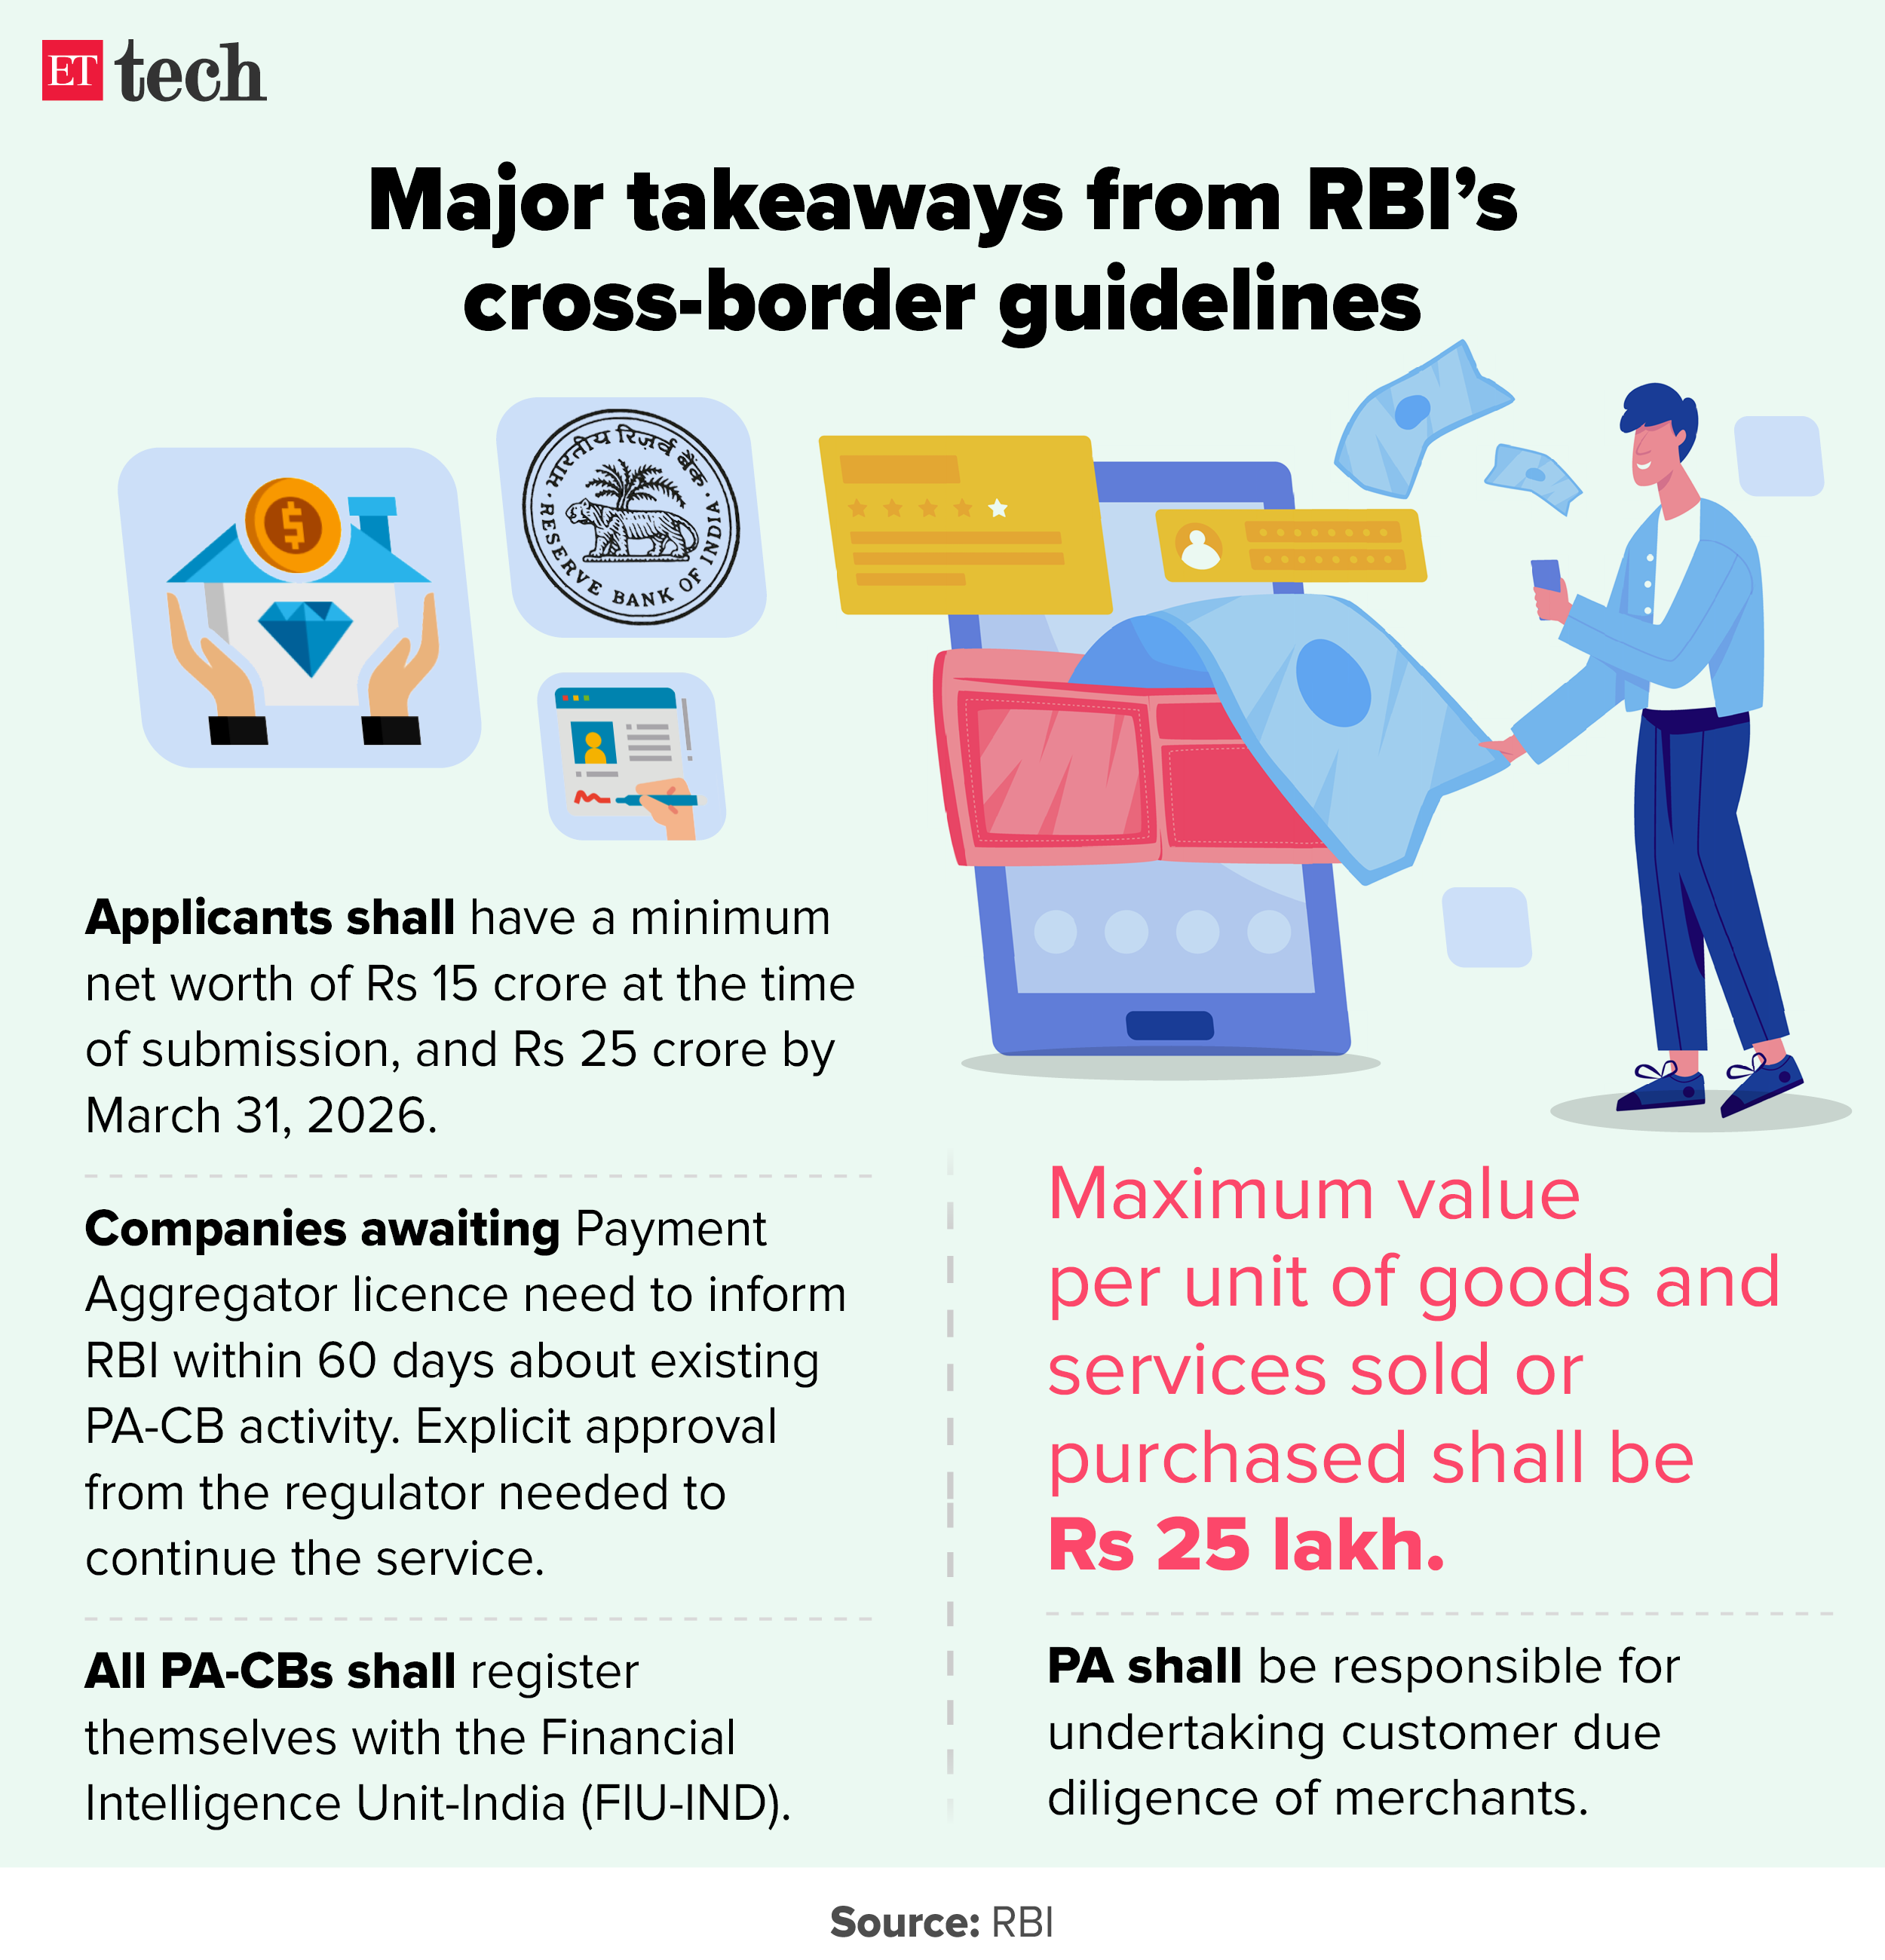 Major takeaways from RBI cross-border guidelines_Graphic_ETTECH